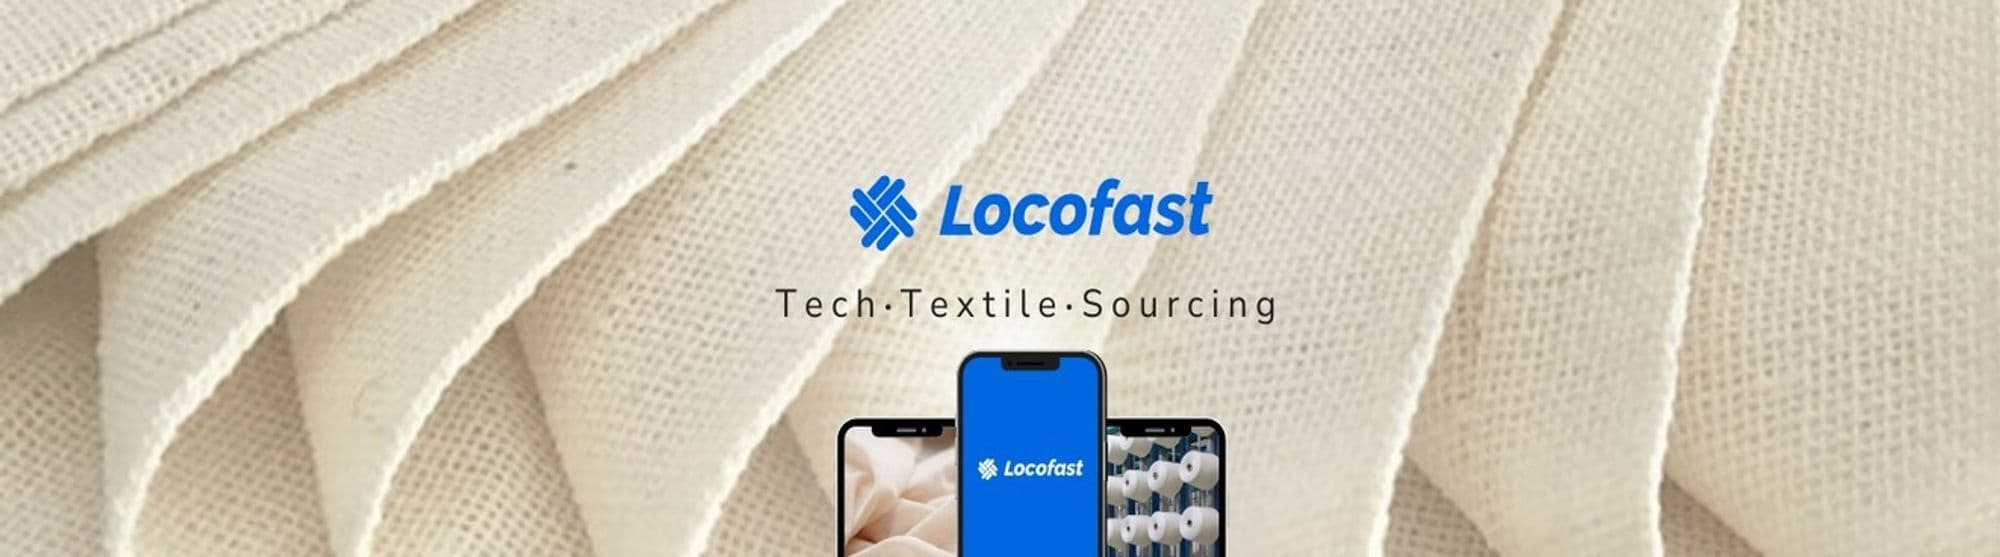 Locofast Cover Image